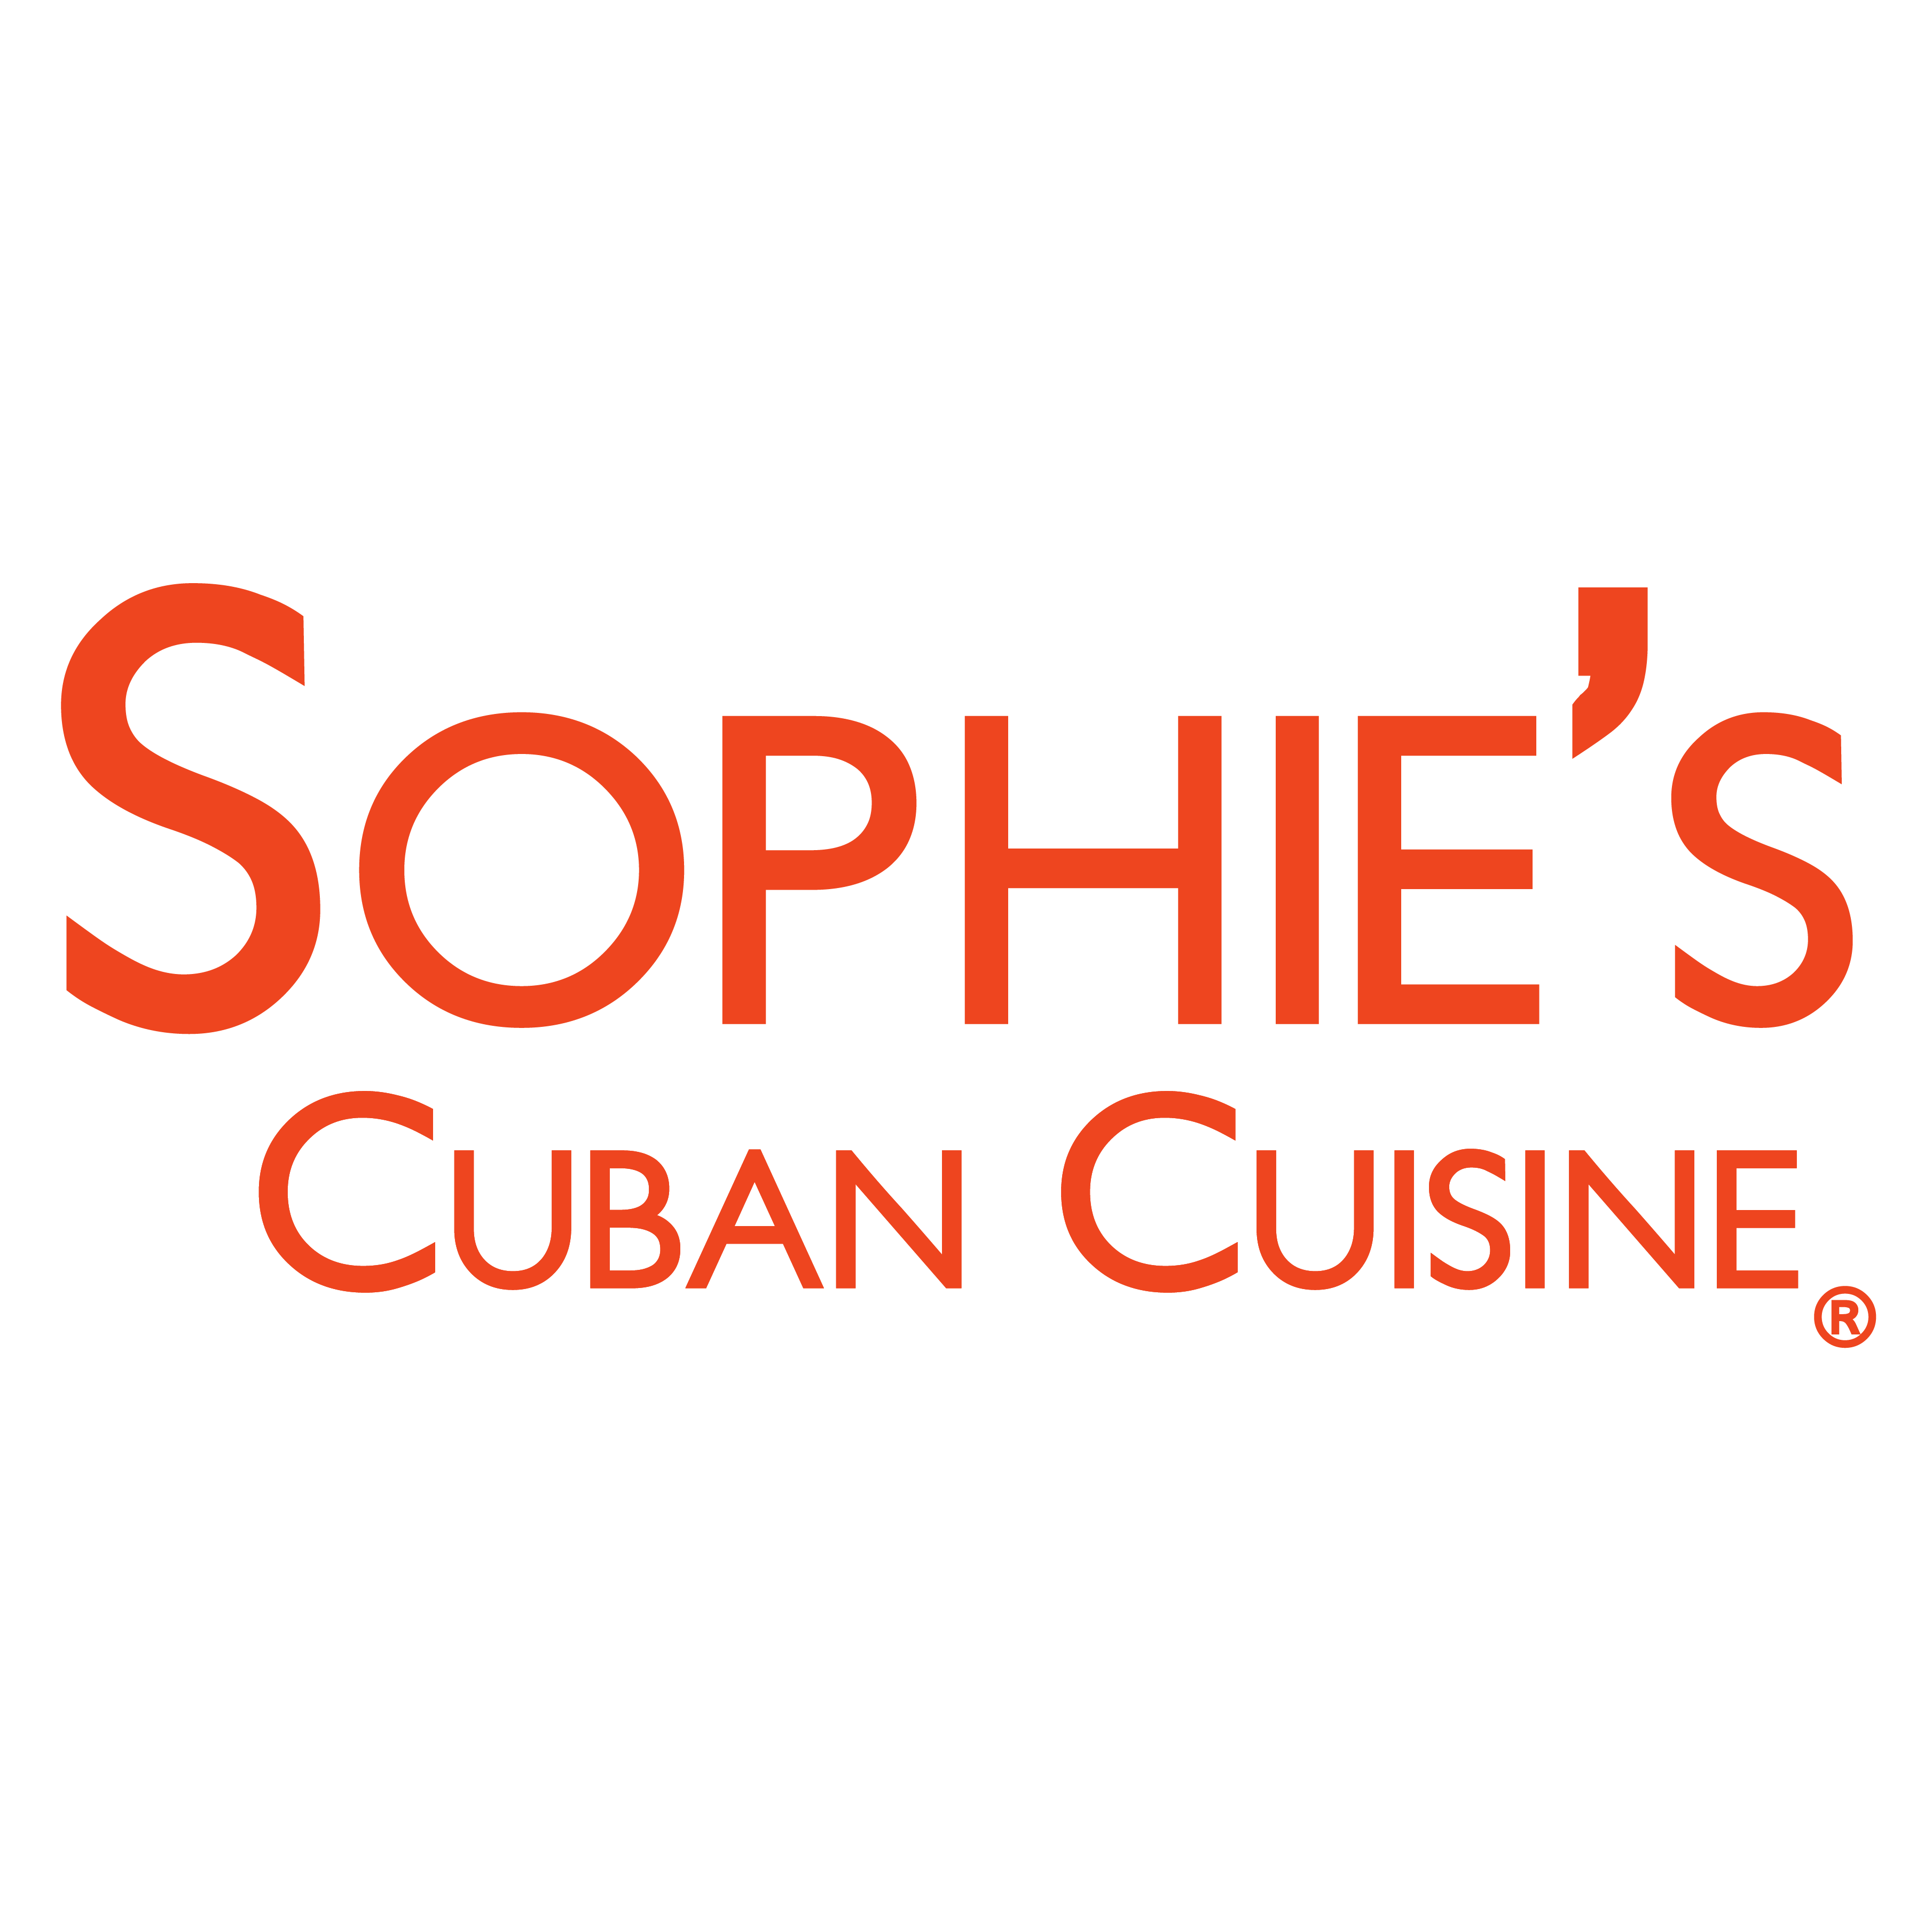 Sophie's Cuban Cuisine - Murray Hill New York (212)260-8884